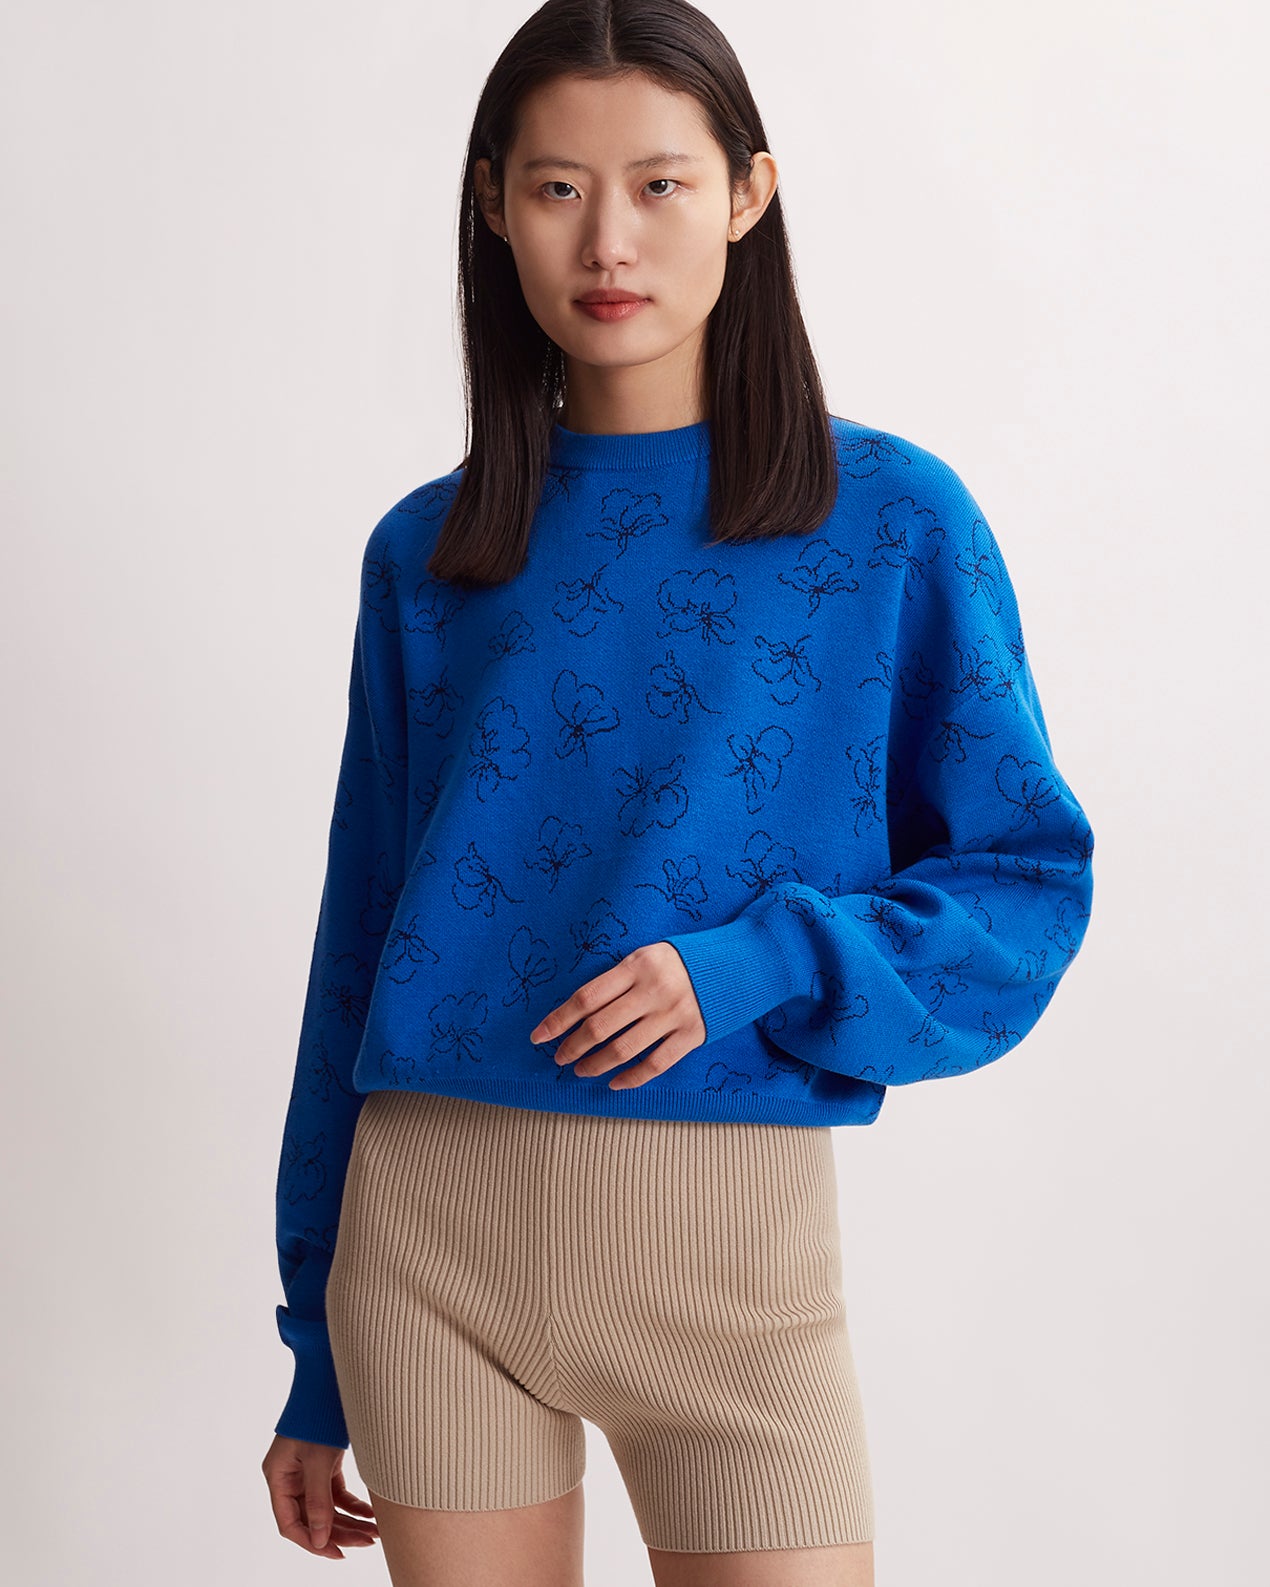 Louis Vuitton Printed Cotton Overshirt Blue. Size Xxs